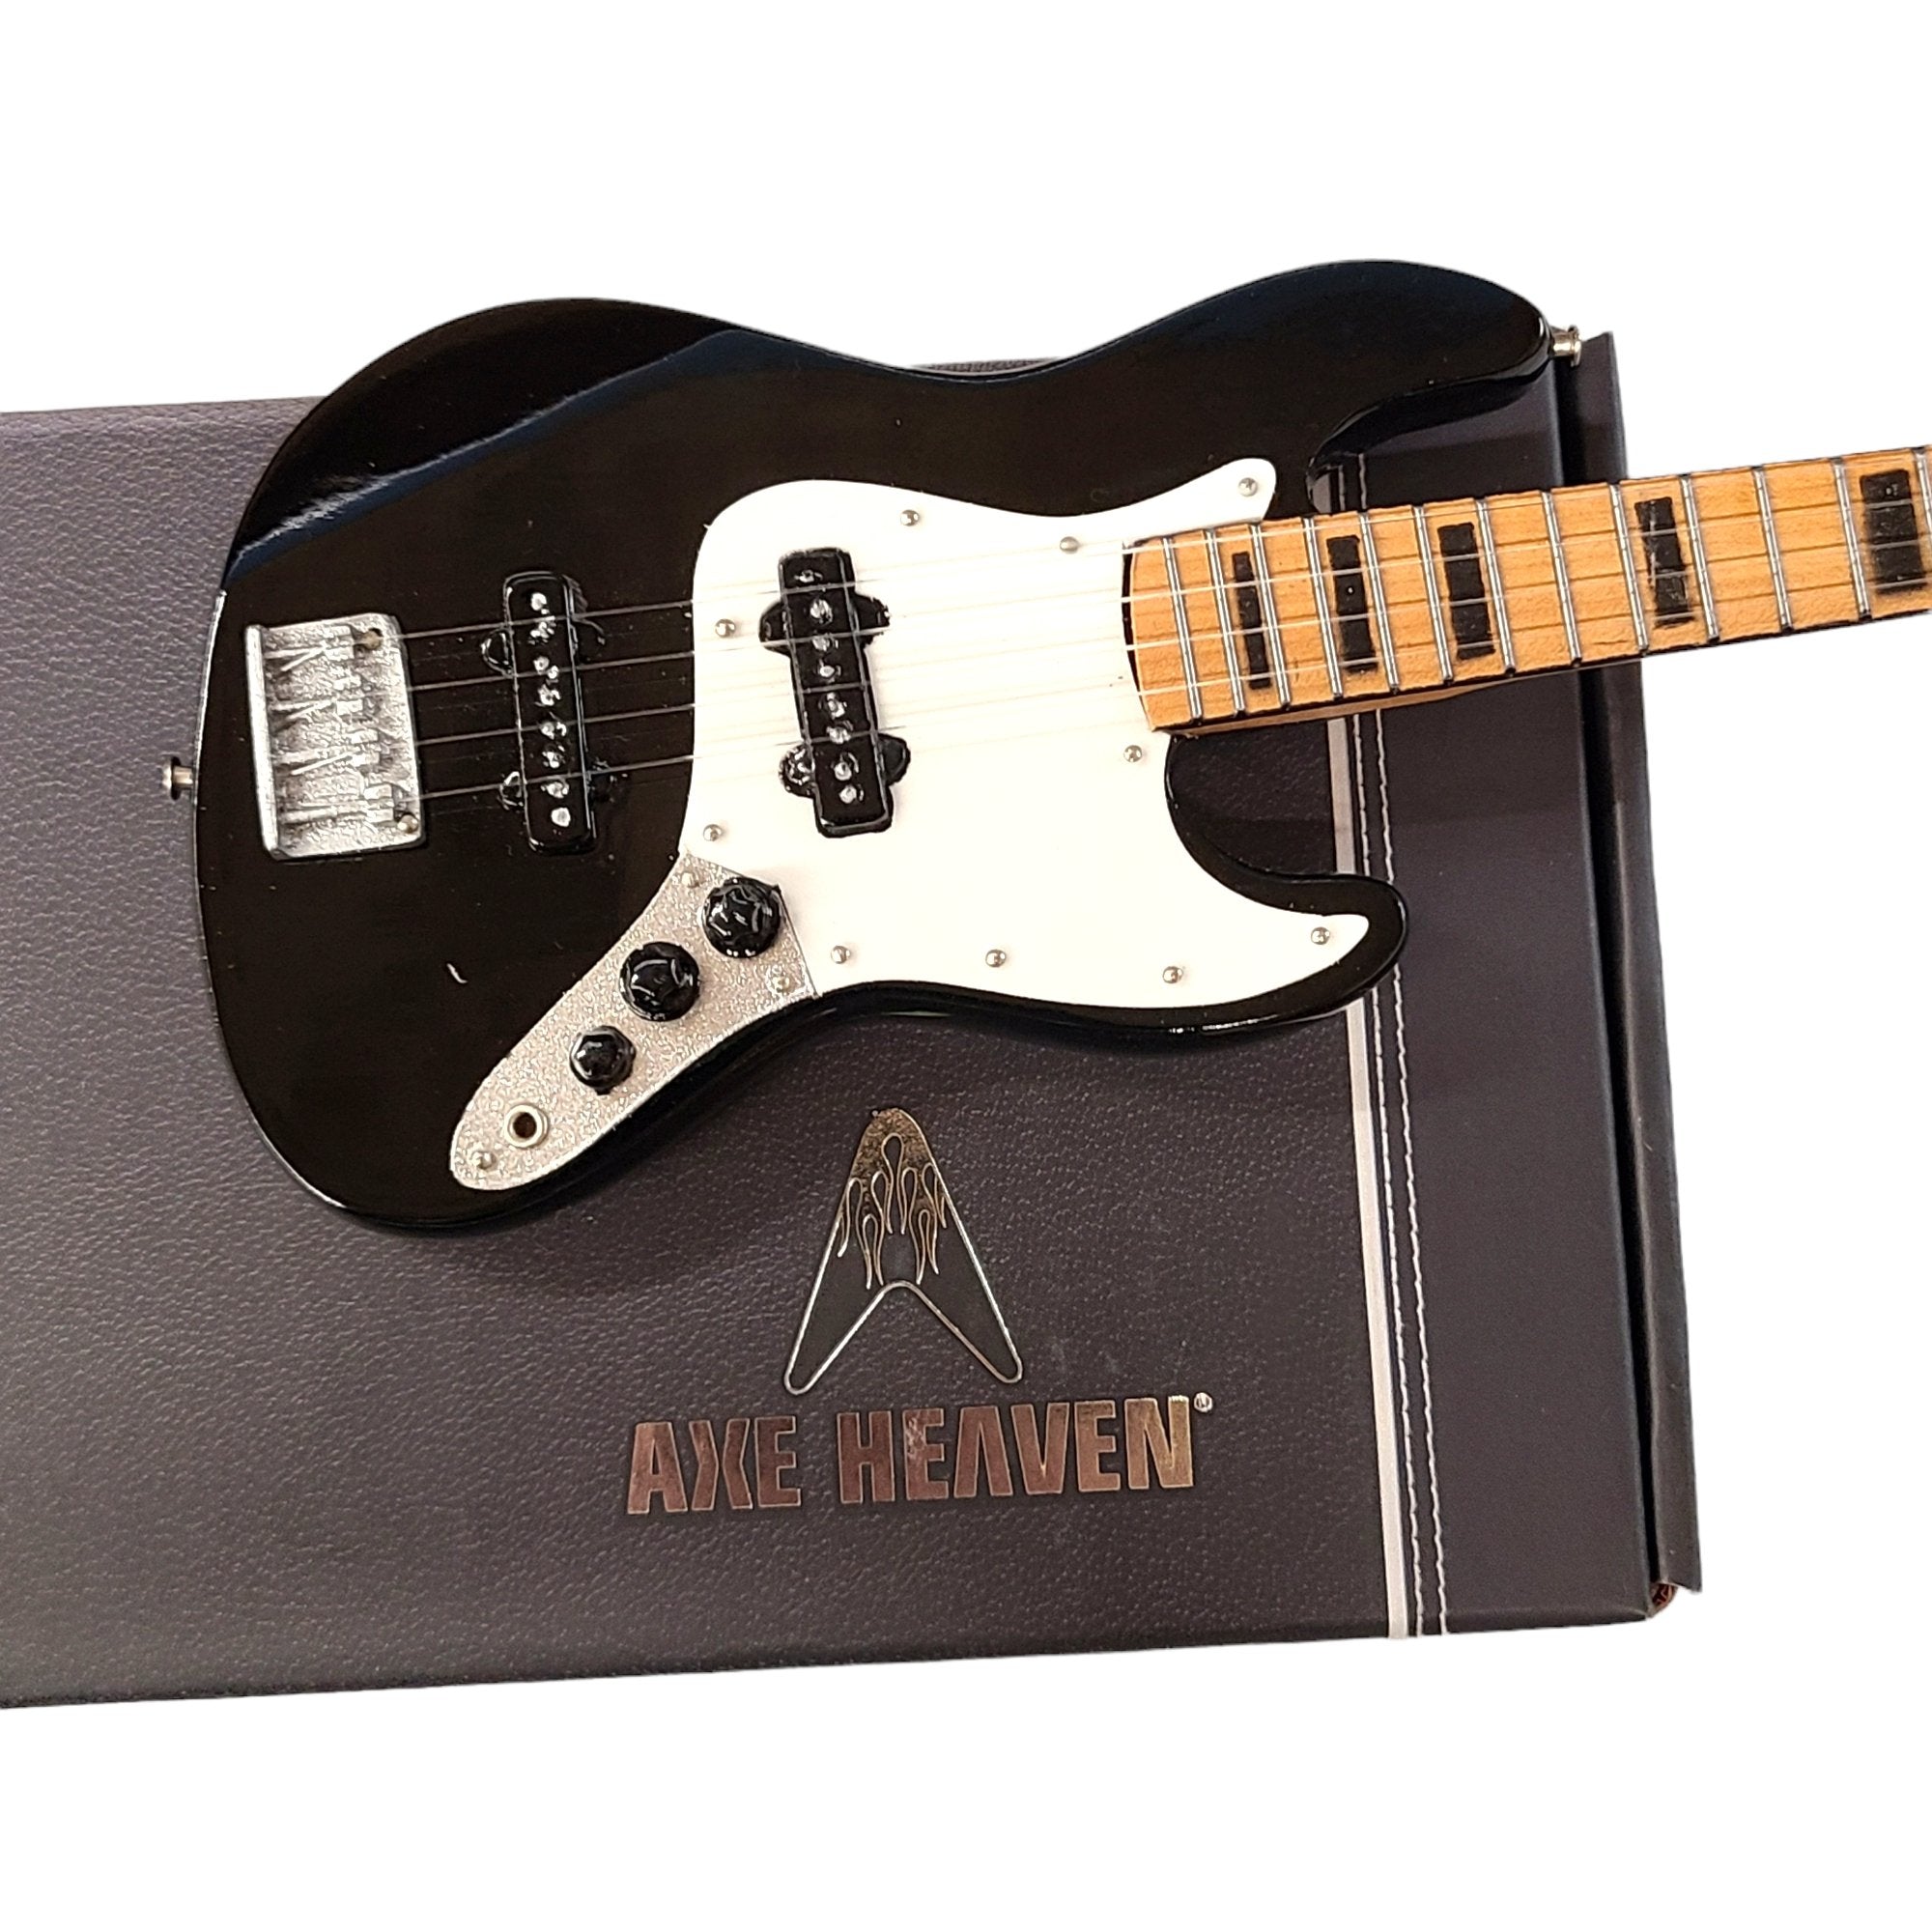 Axe Heaven Black Fender Bass Mini Guitar Replica FJ-003